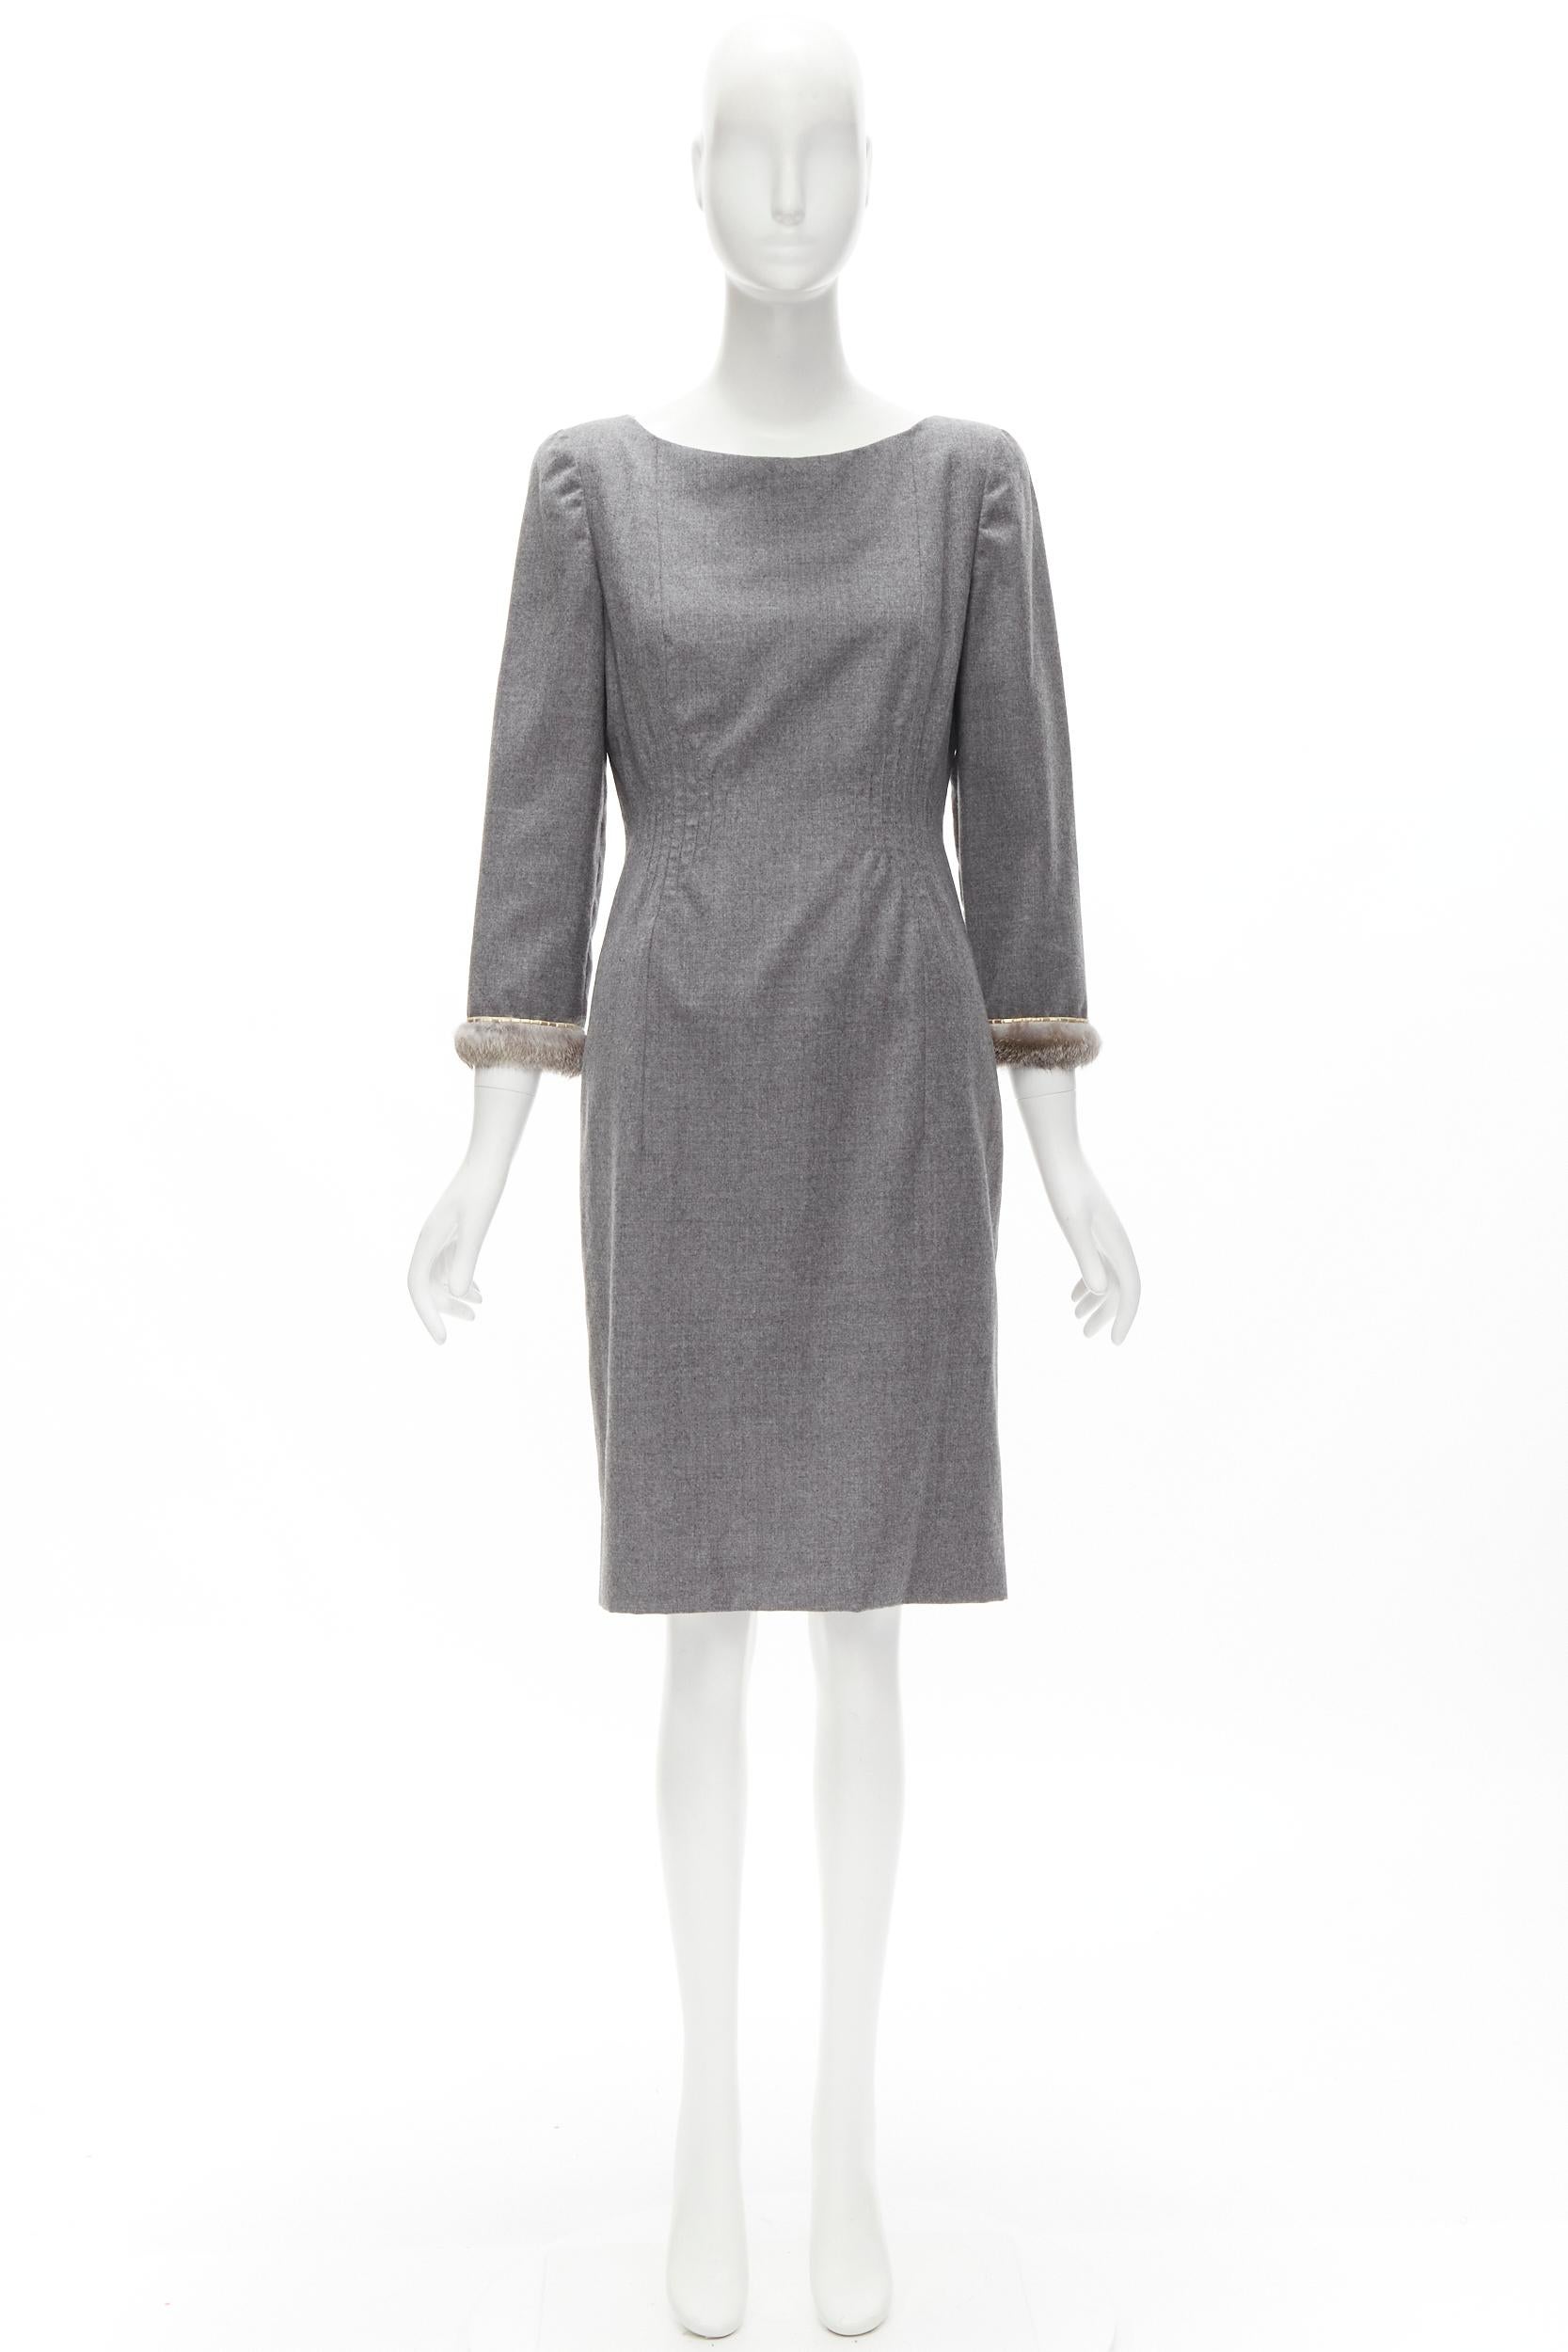 VALENTINO Vintage grey wool cashmere fur cuff pinched waist dress US8 M For Sale 4